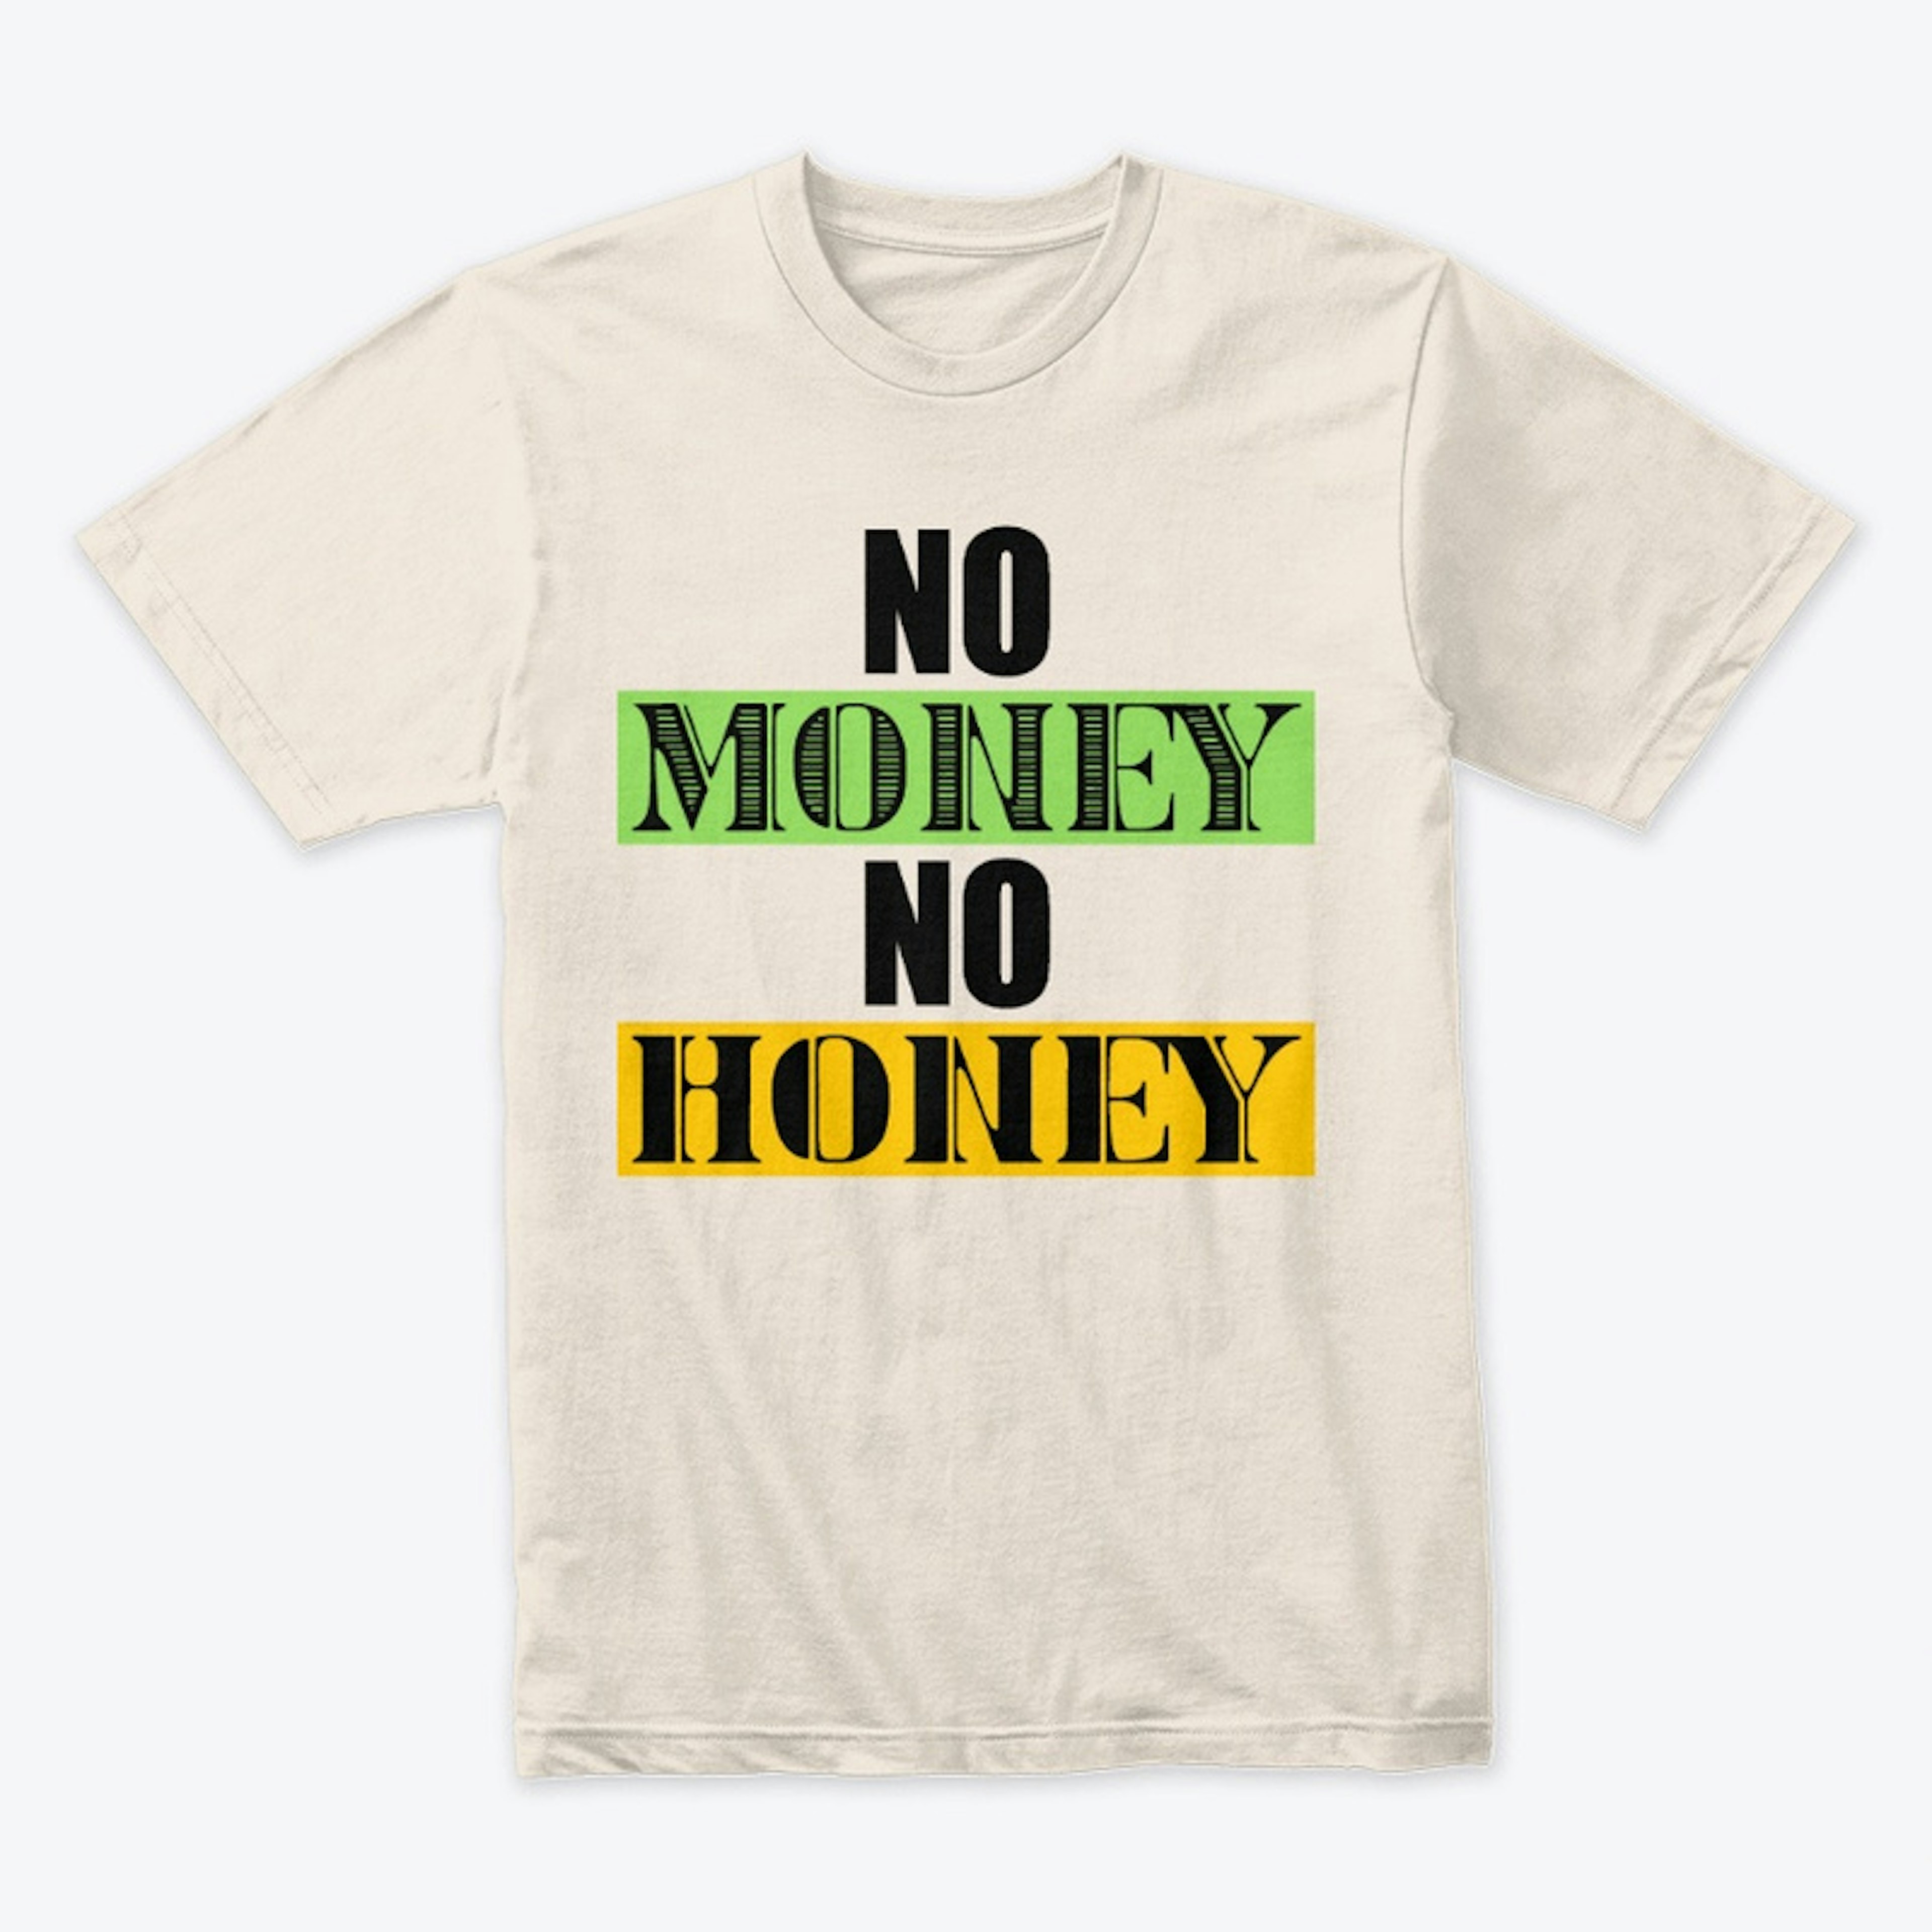 NO MONEY, NO HONEY! Collection II